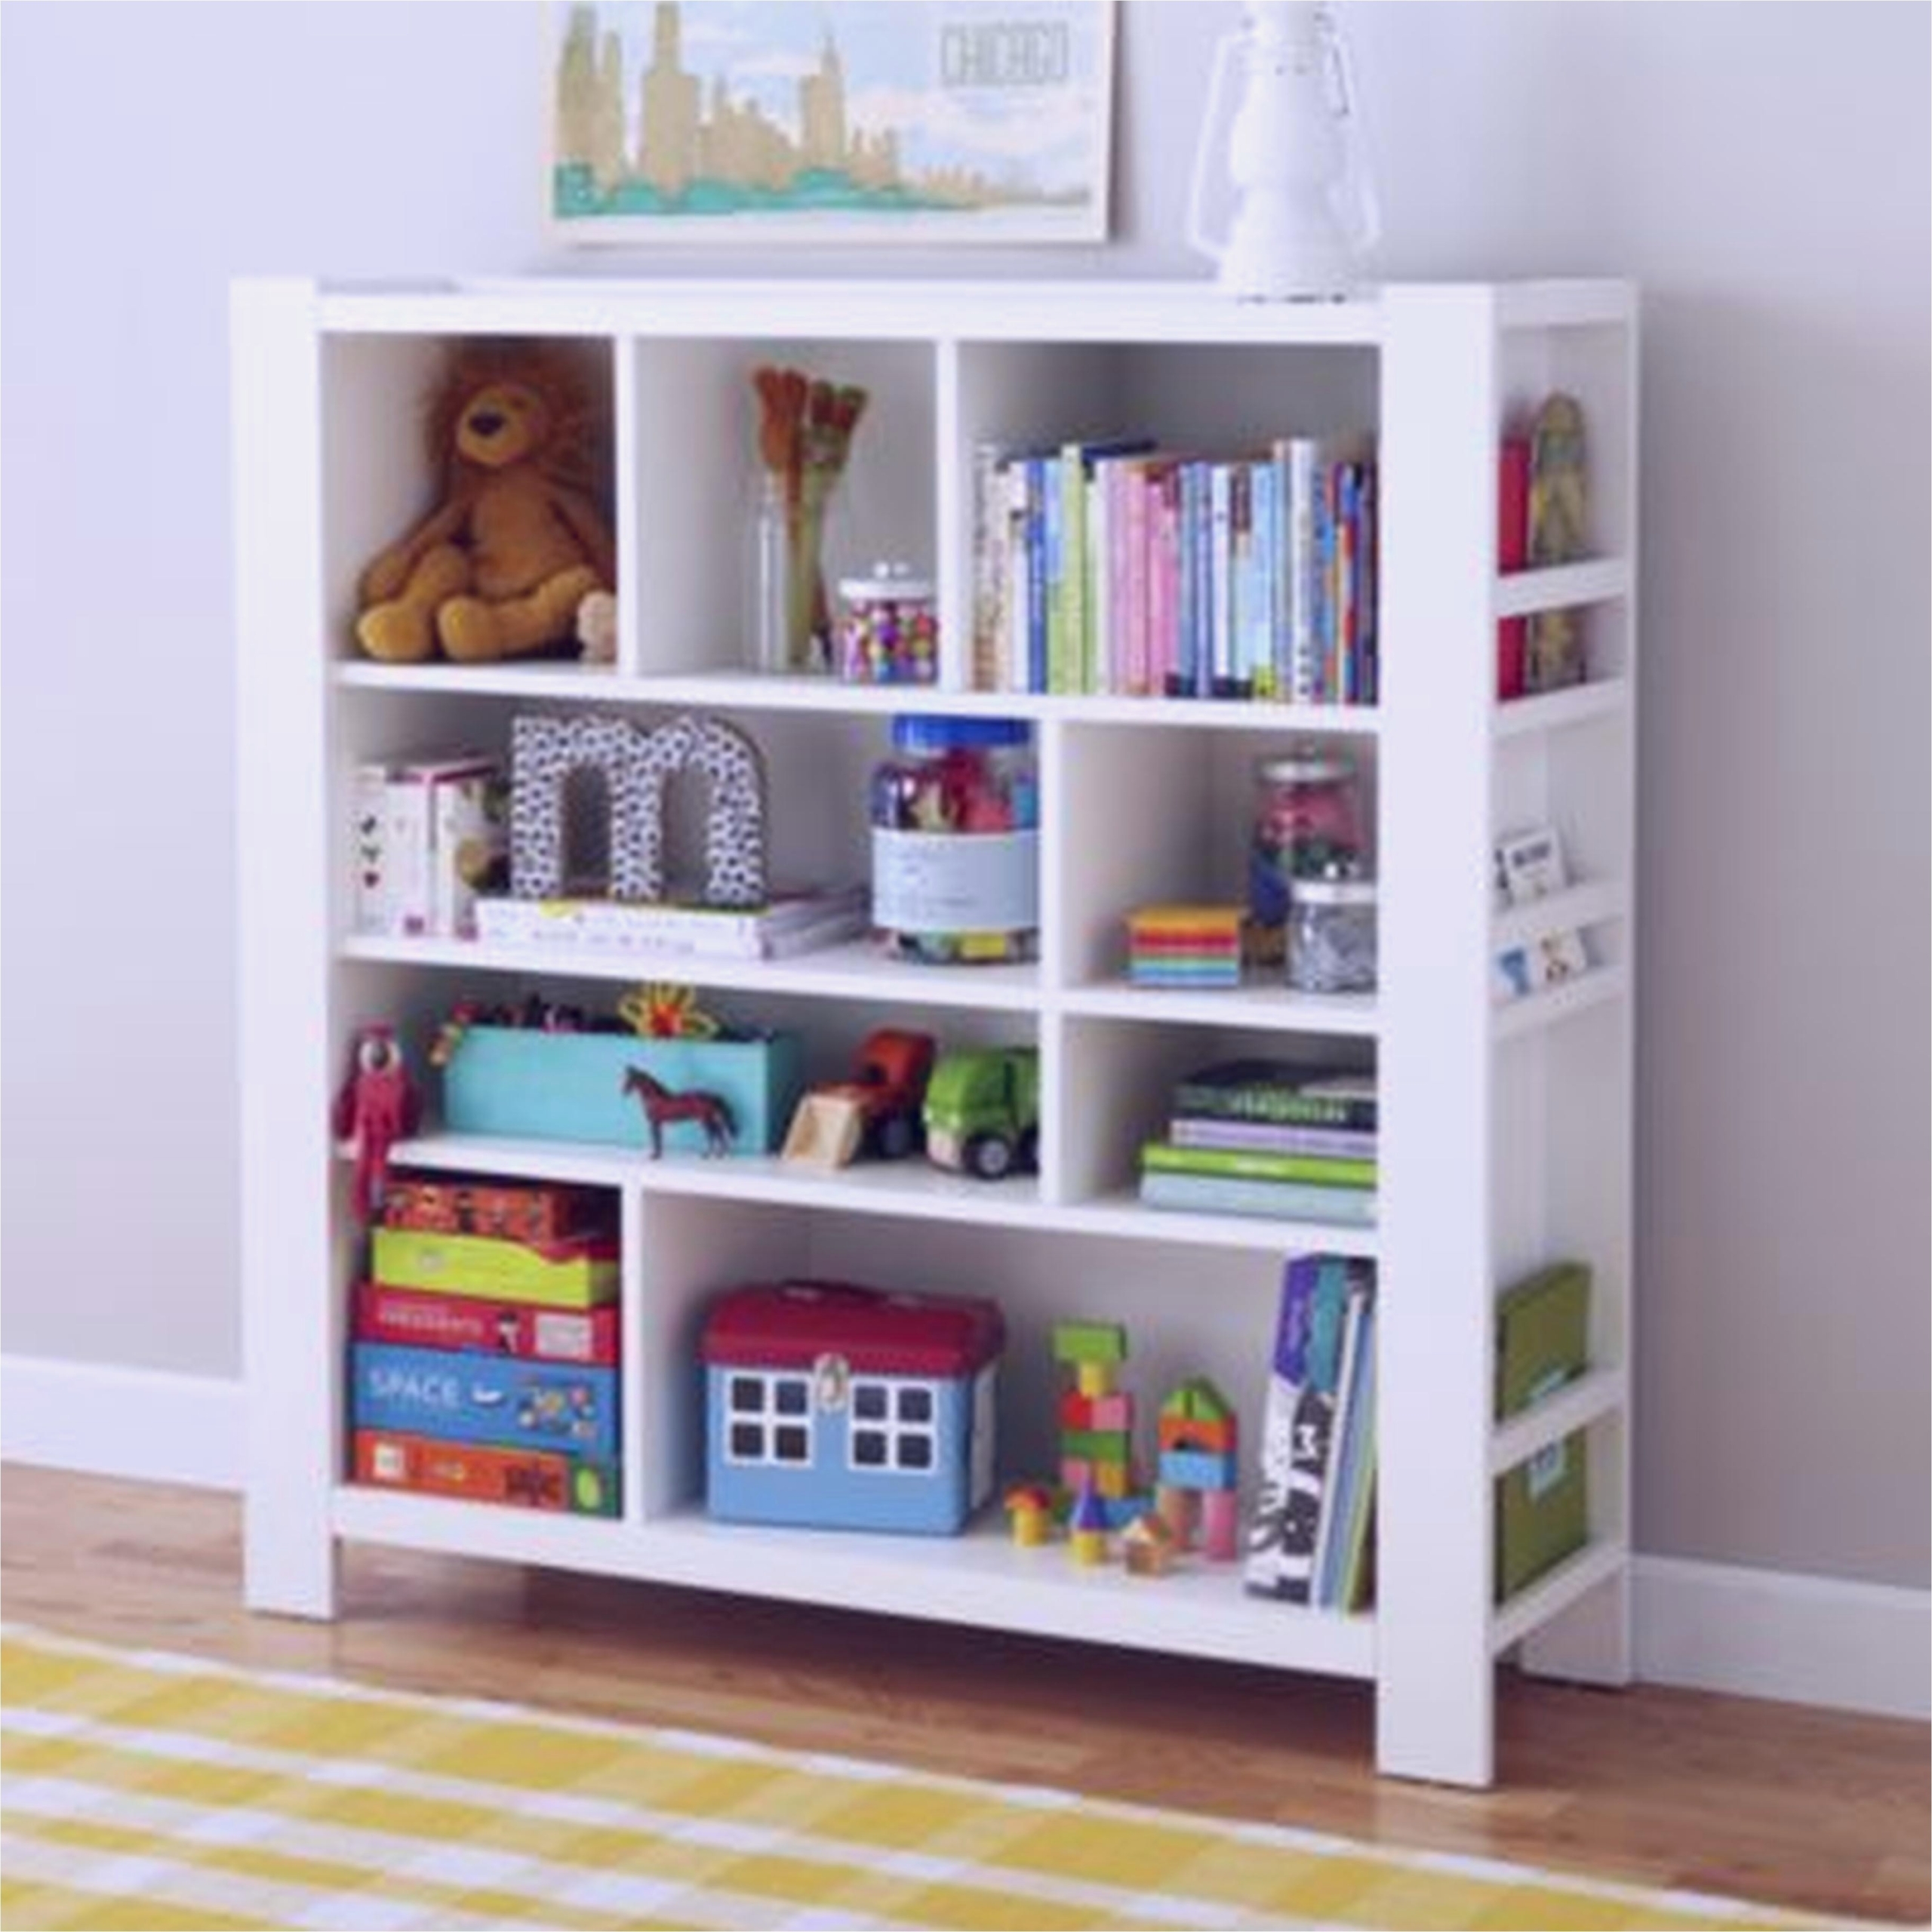 Diy bookshelf for kids